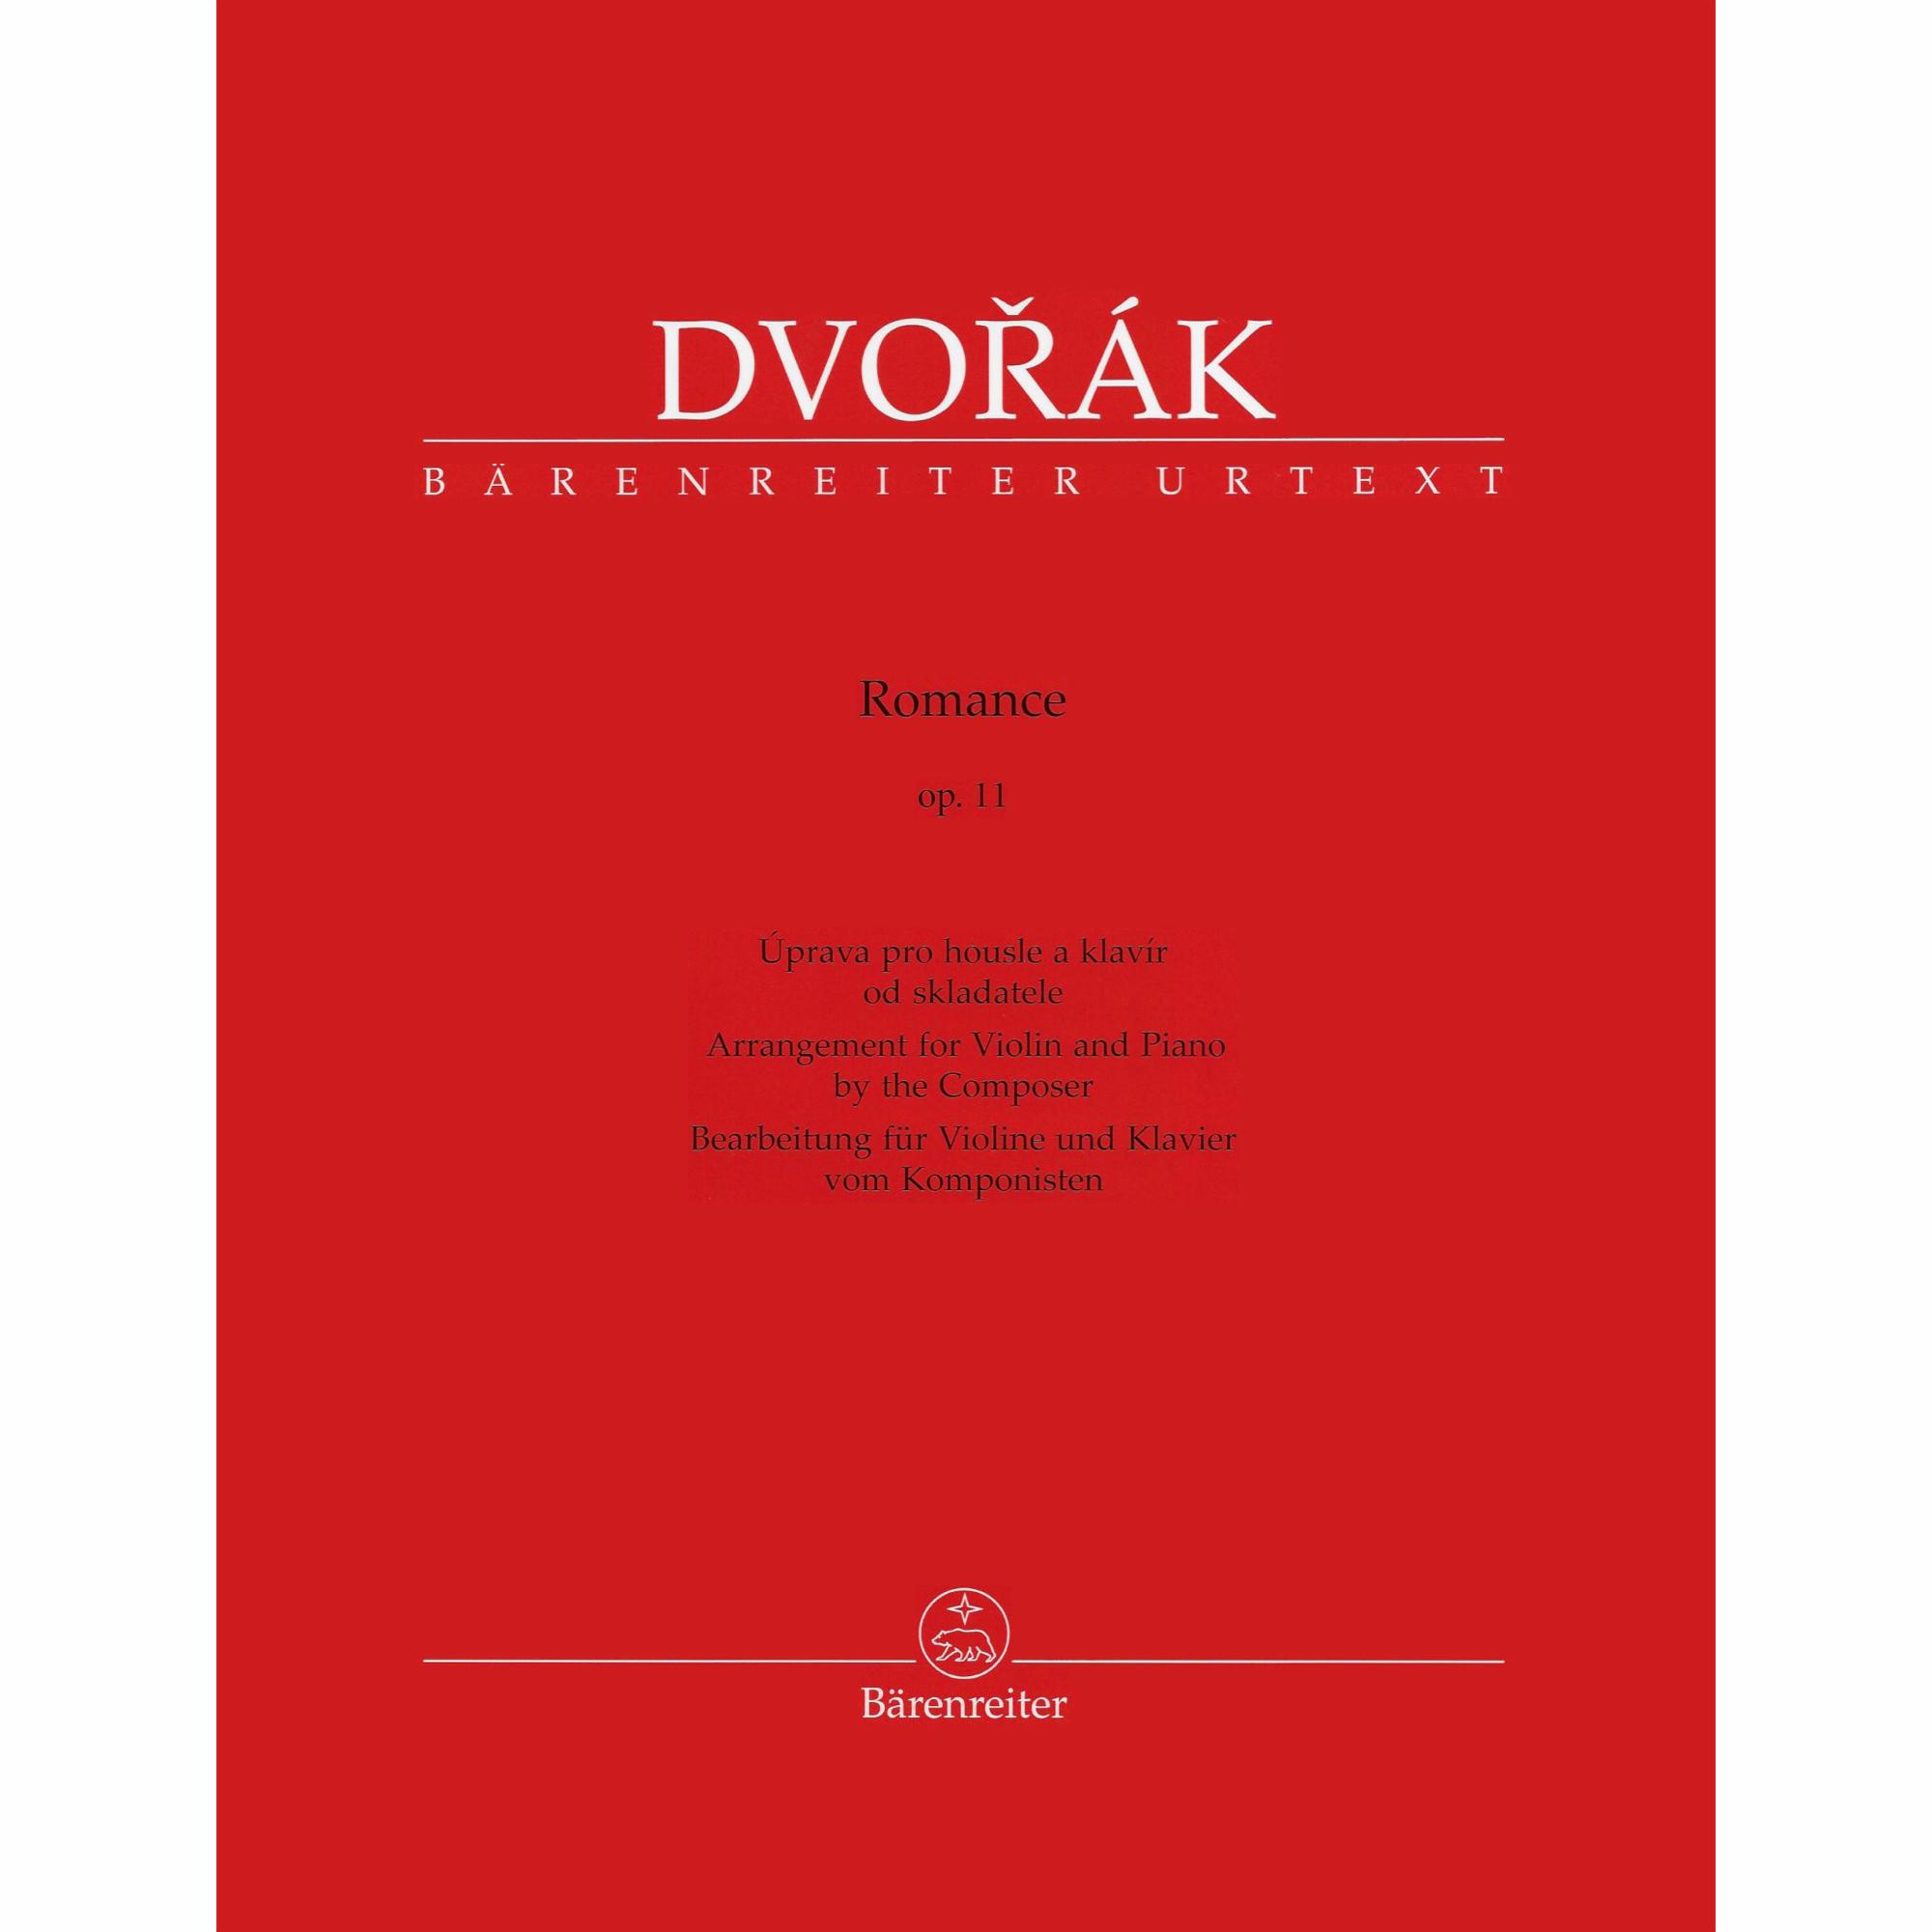 Dvorak -- Romance, Op. 11 for Violin and Piano